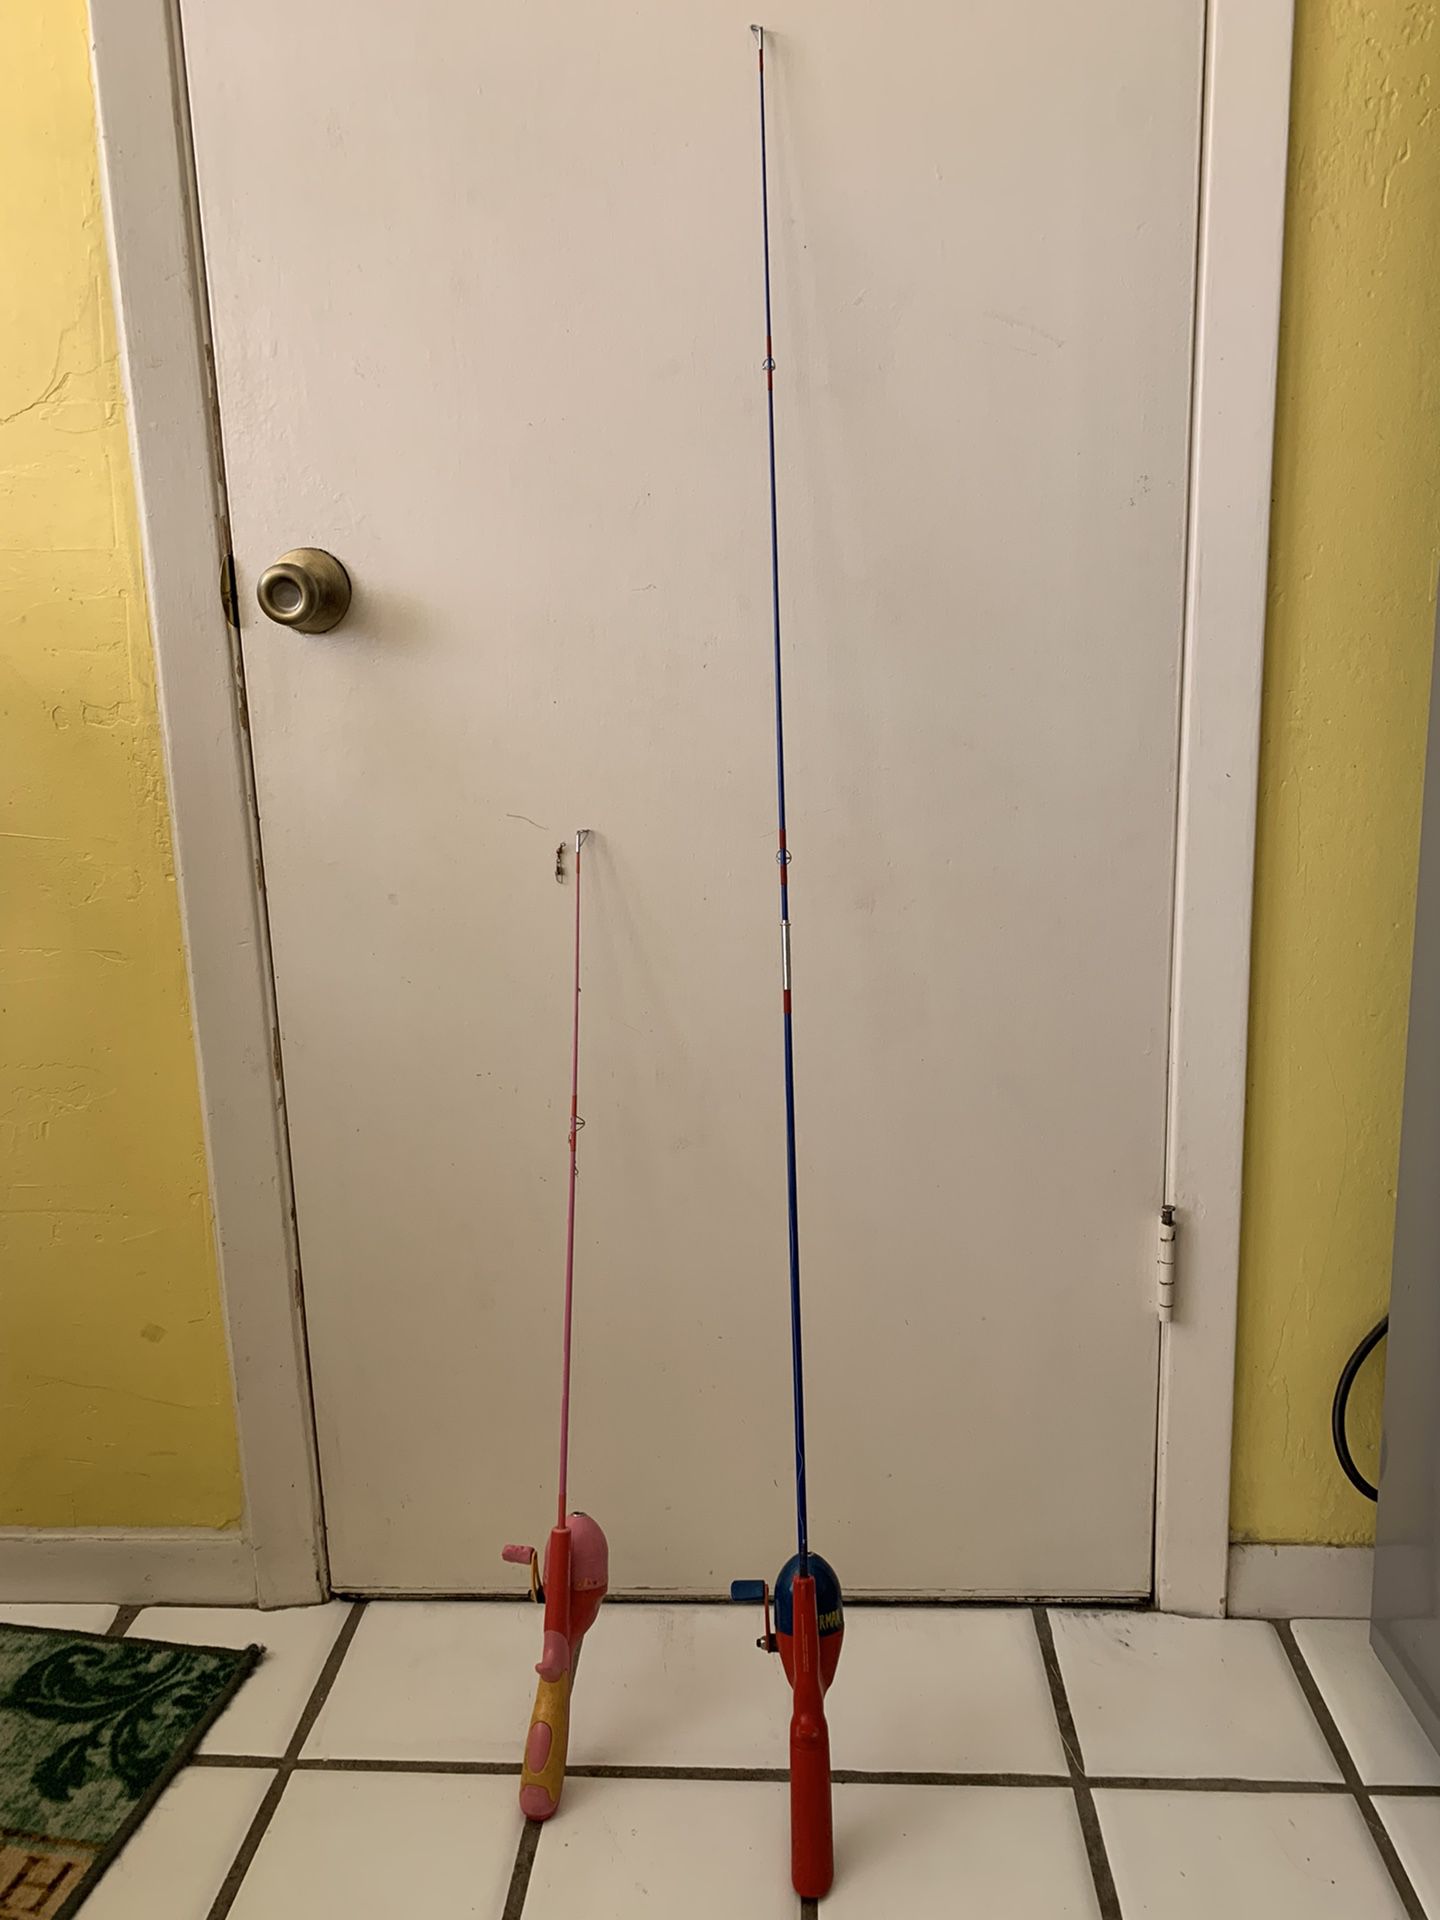 2 Fishing Rod Set For Kids